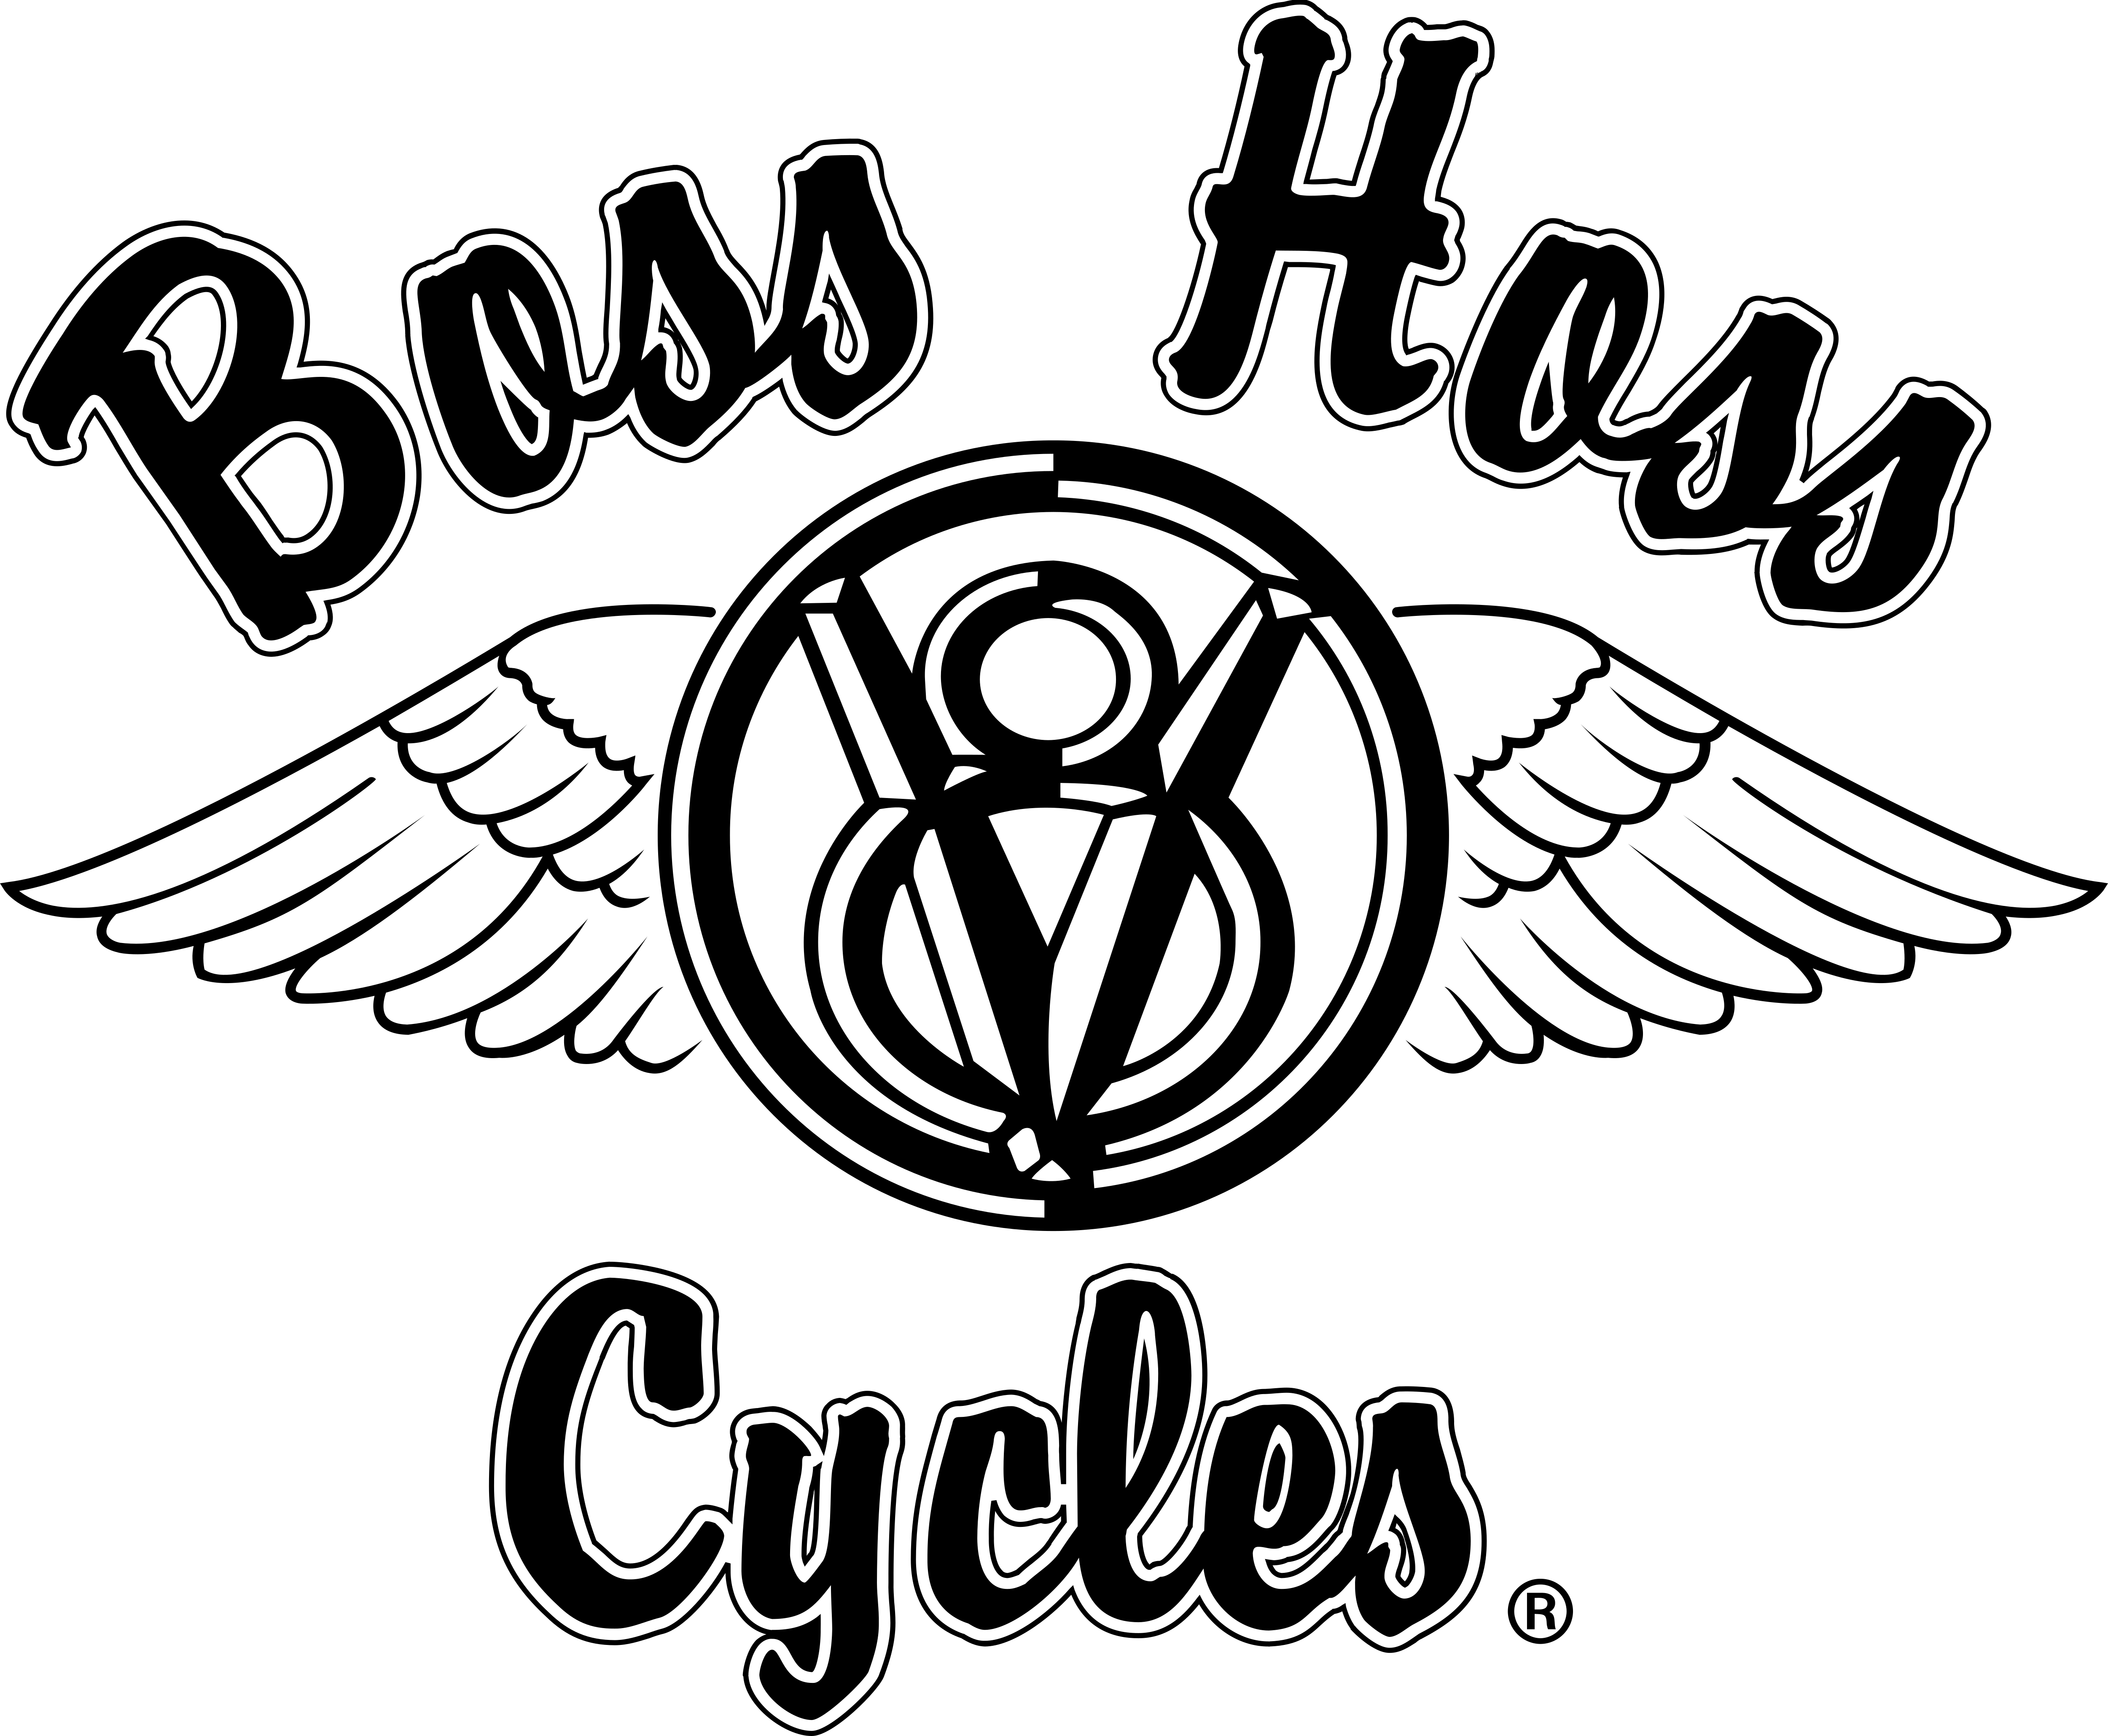 Download Boss Hoss Cycles vector logo.